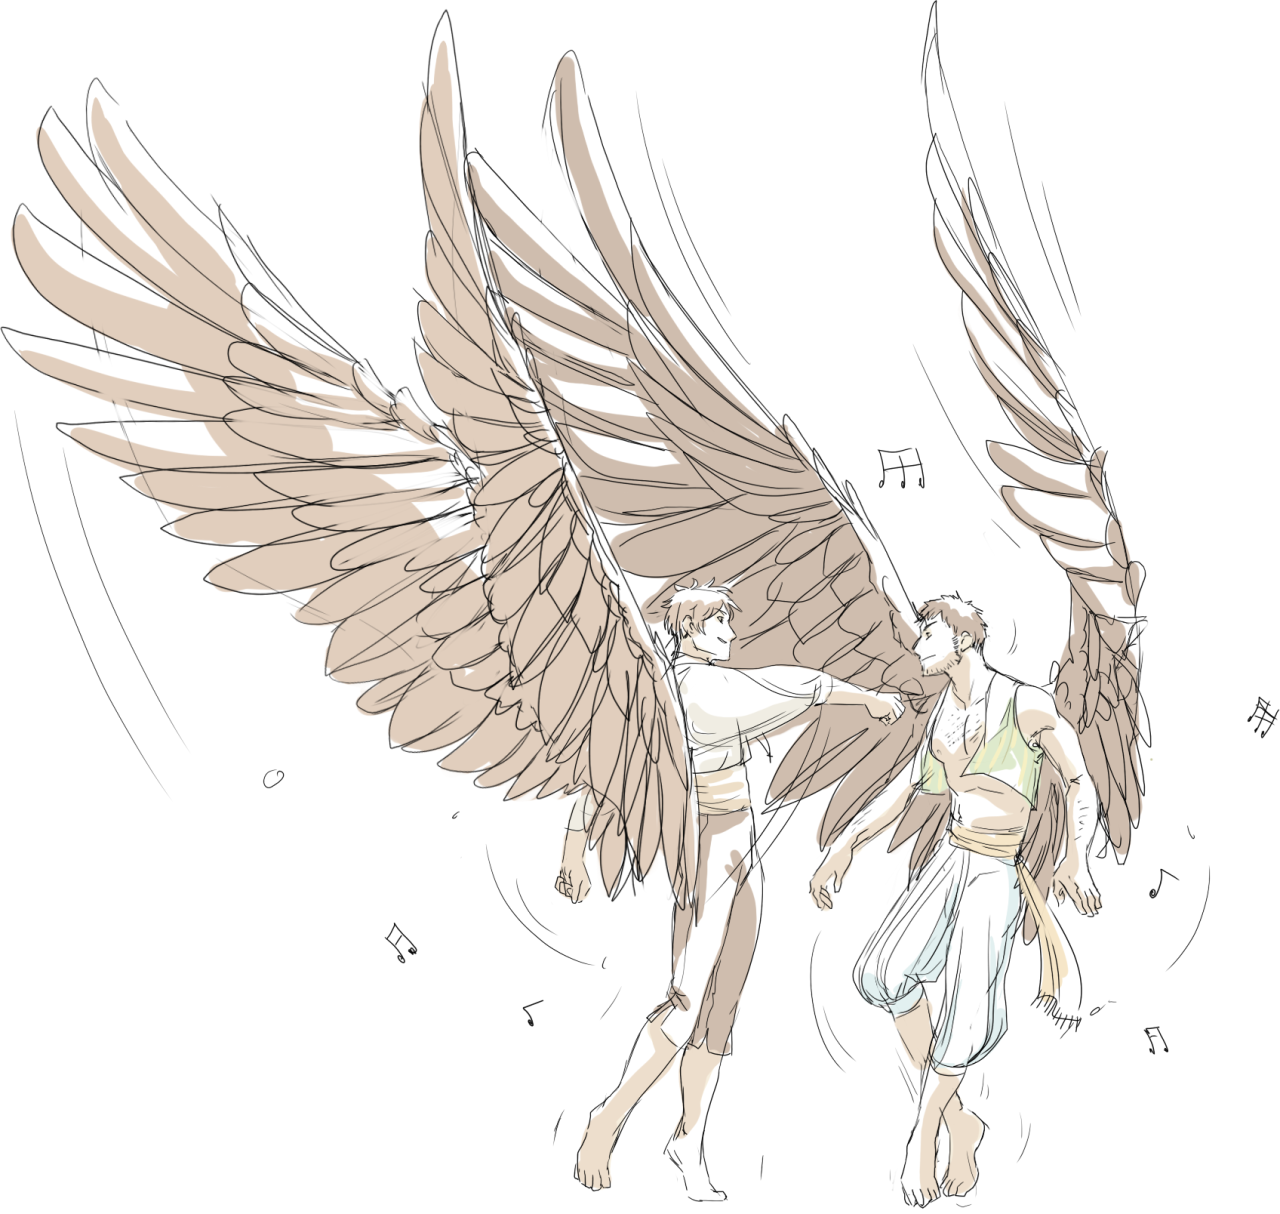 Несколько крылатых. Крылья референс ангела ангела. Крылья ангела референс. Механические Крылья арт референс. Референс ангелов.